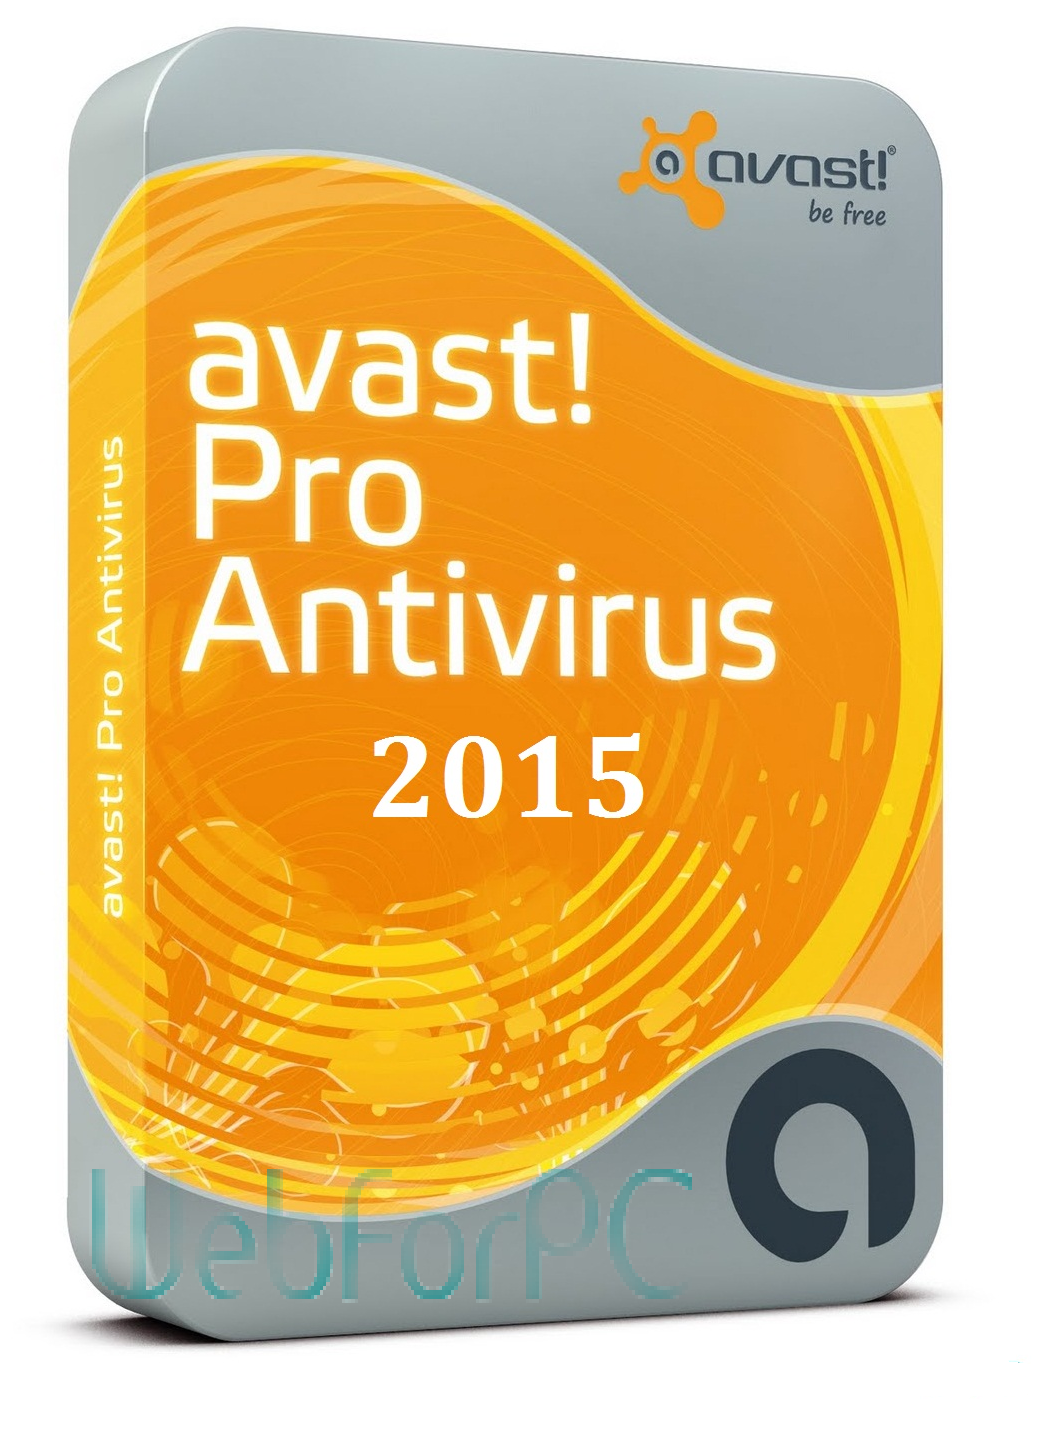 what is the best antivirus 2015